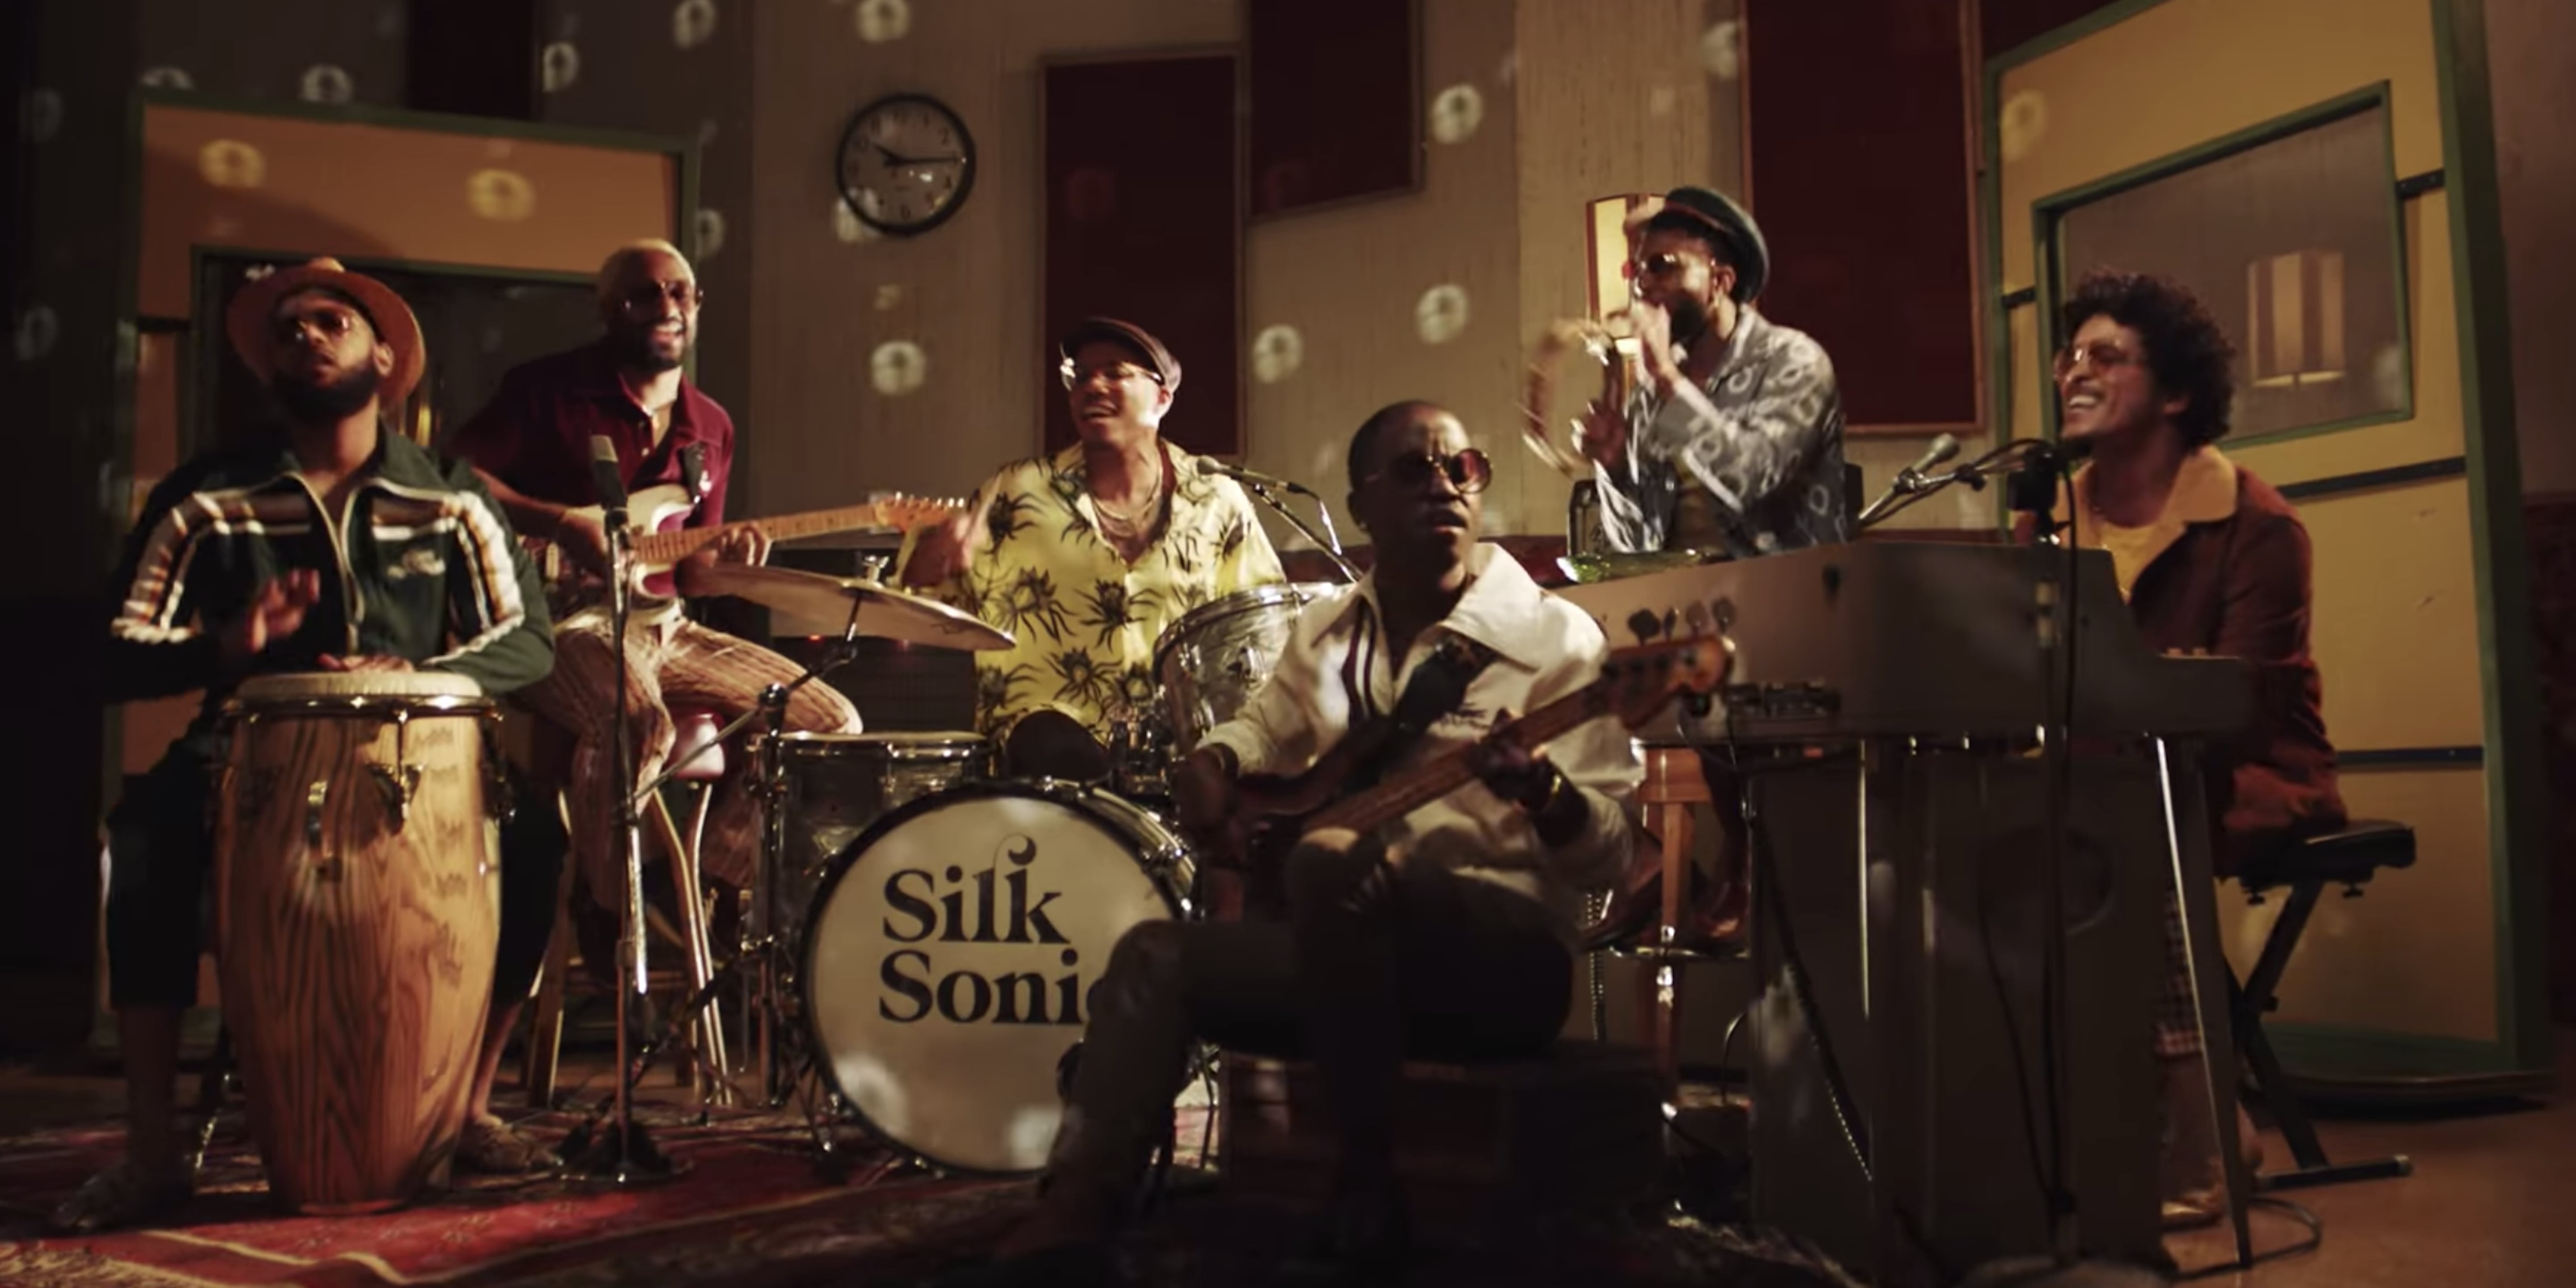 Bruno Mars, Anderson .Paak, Silk Sonic - Leave the Door Open [Official  Video] 